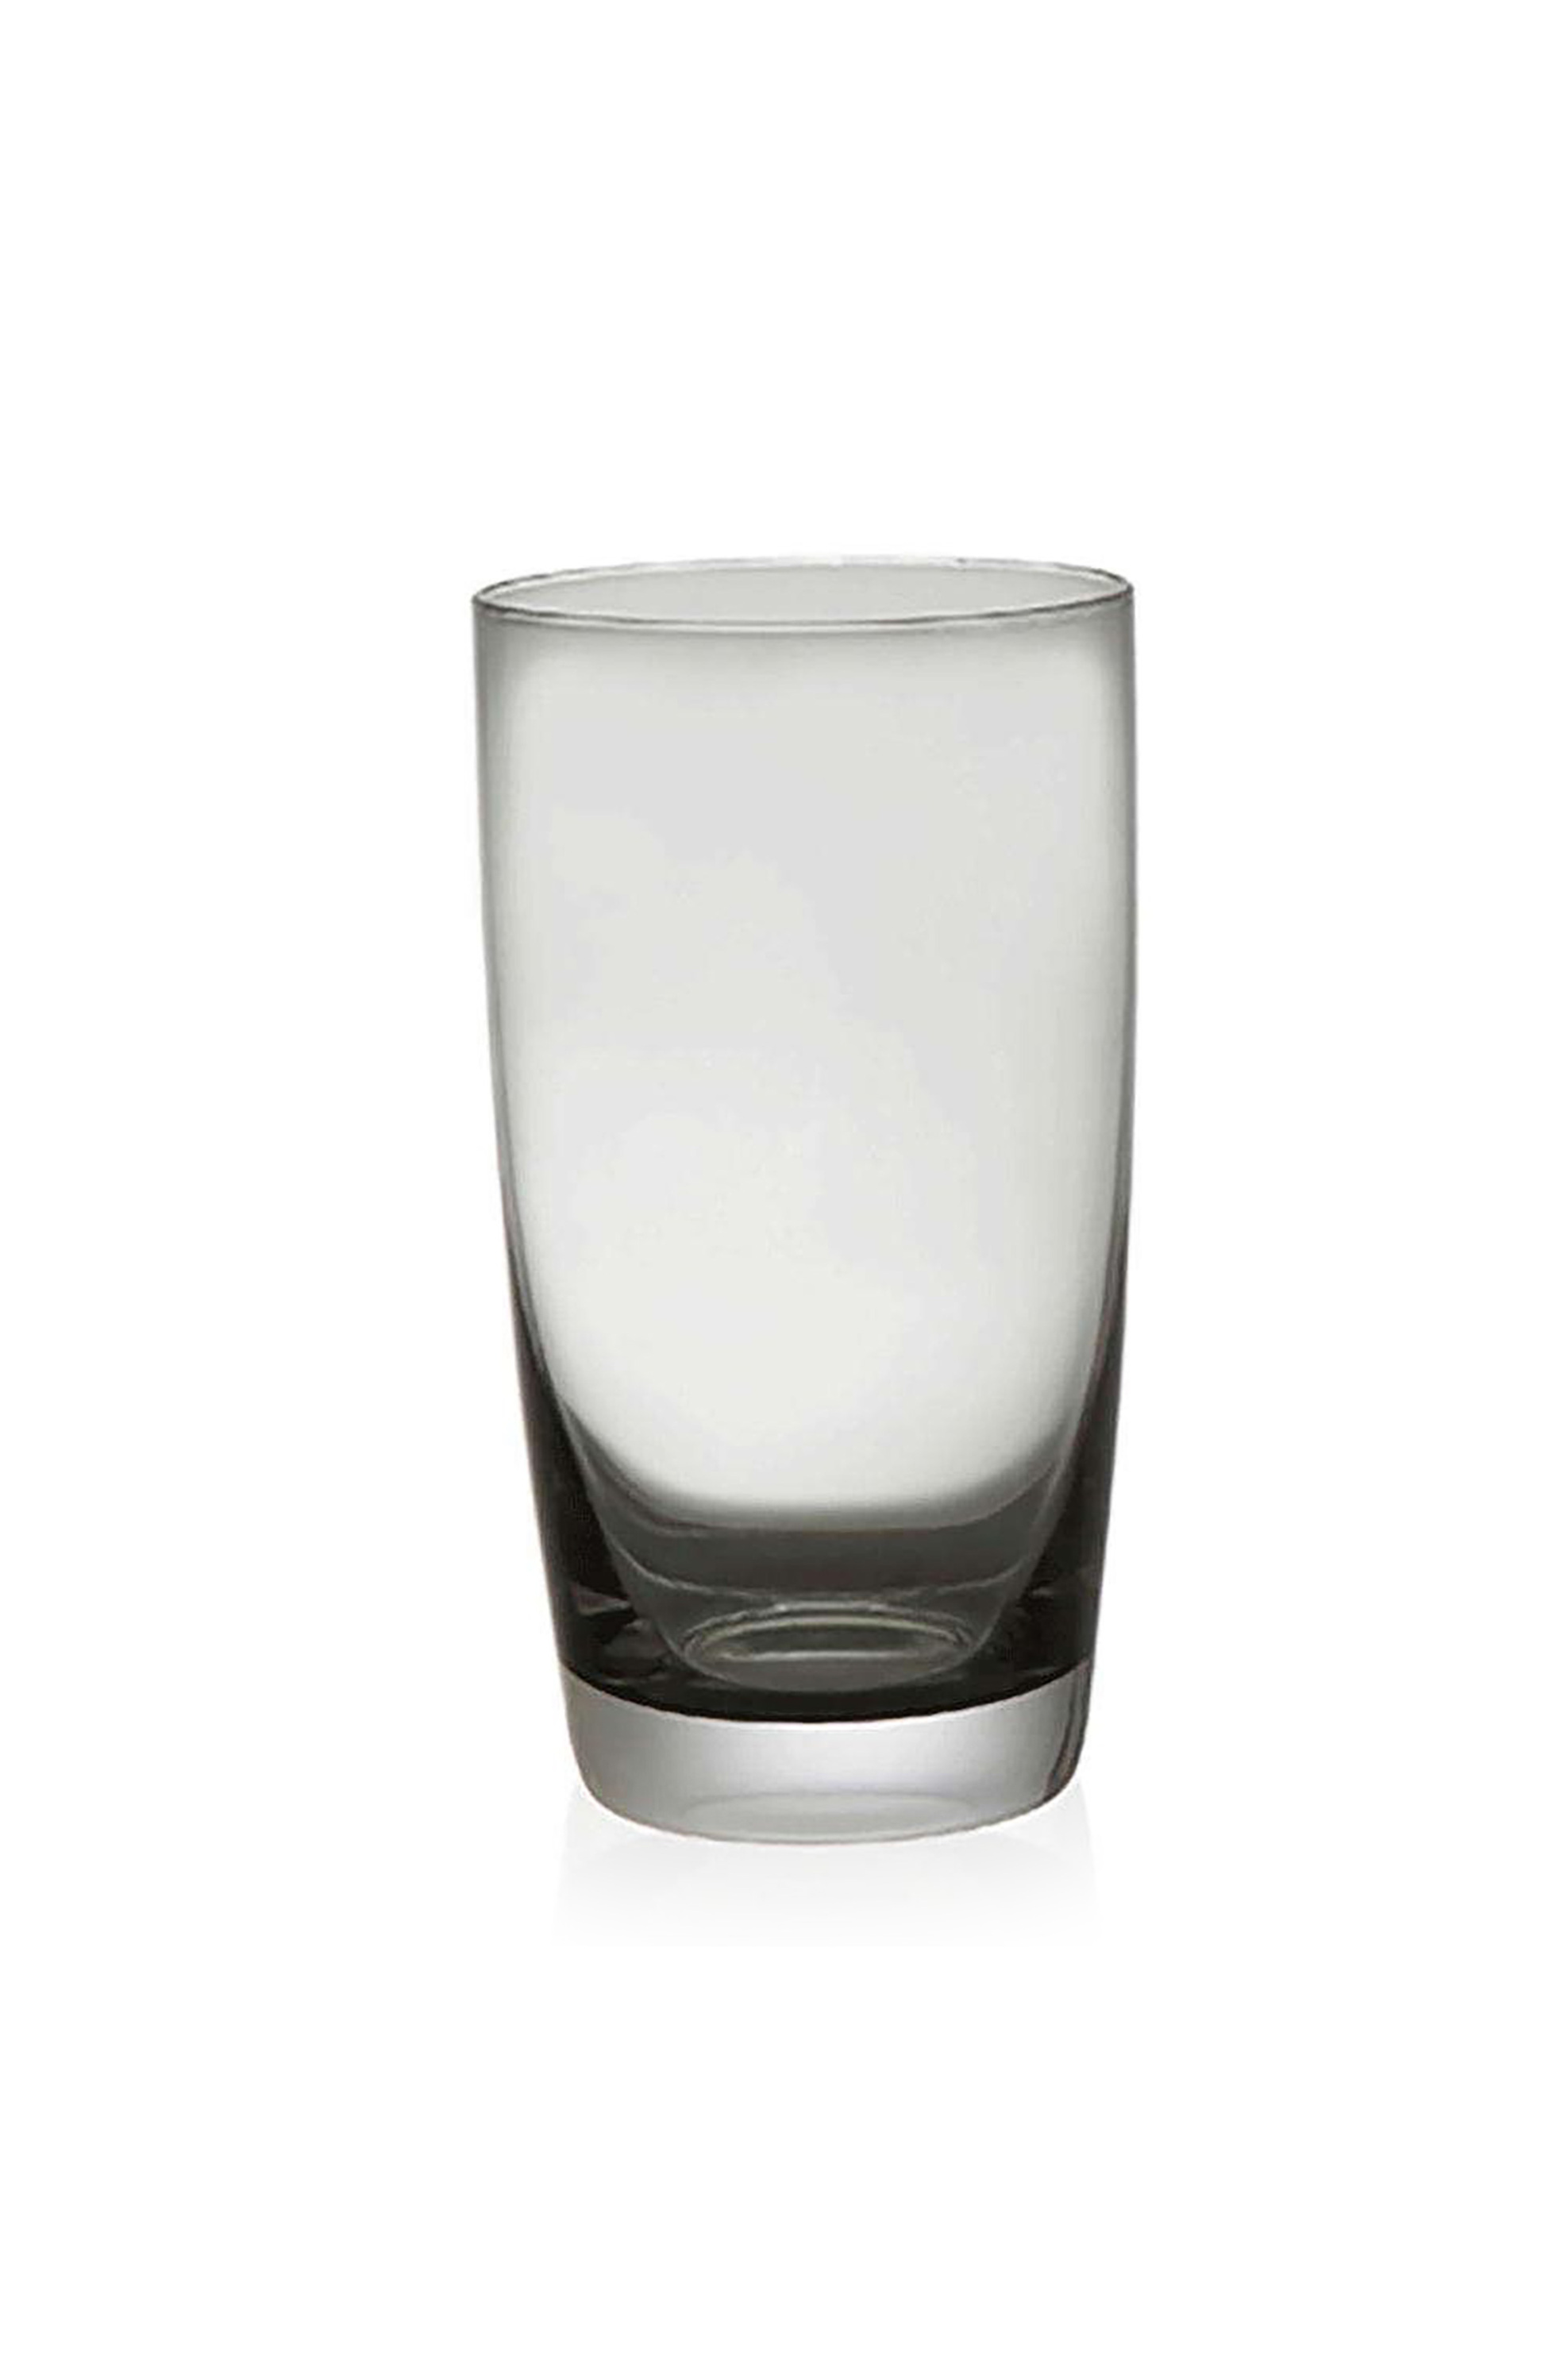 Home > ΚΟΥΖΙΝΑ > Υαλικά > Ποτήρια CRYSPO TRIO ποτήρι σωλήνας 540 ml "Irid" - 52.013.50